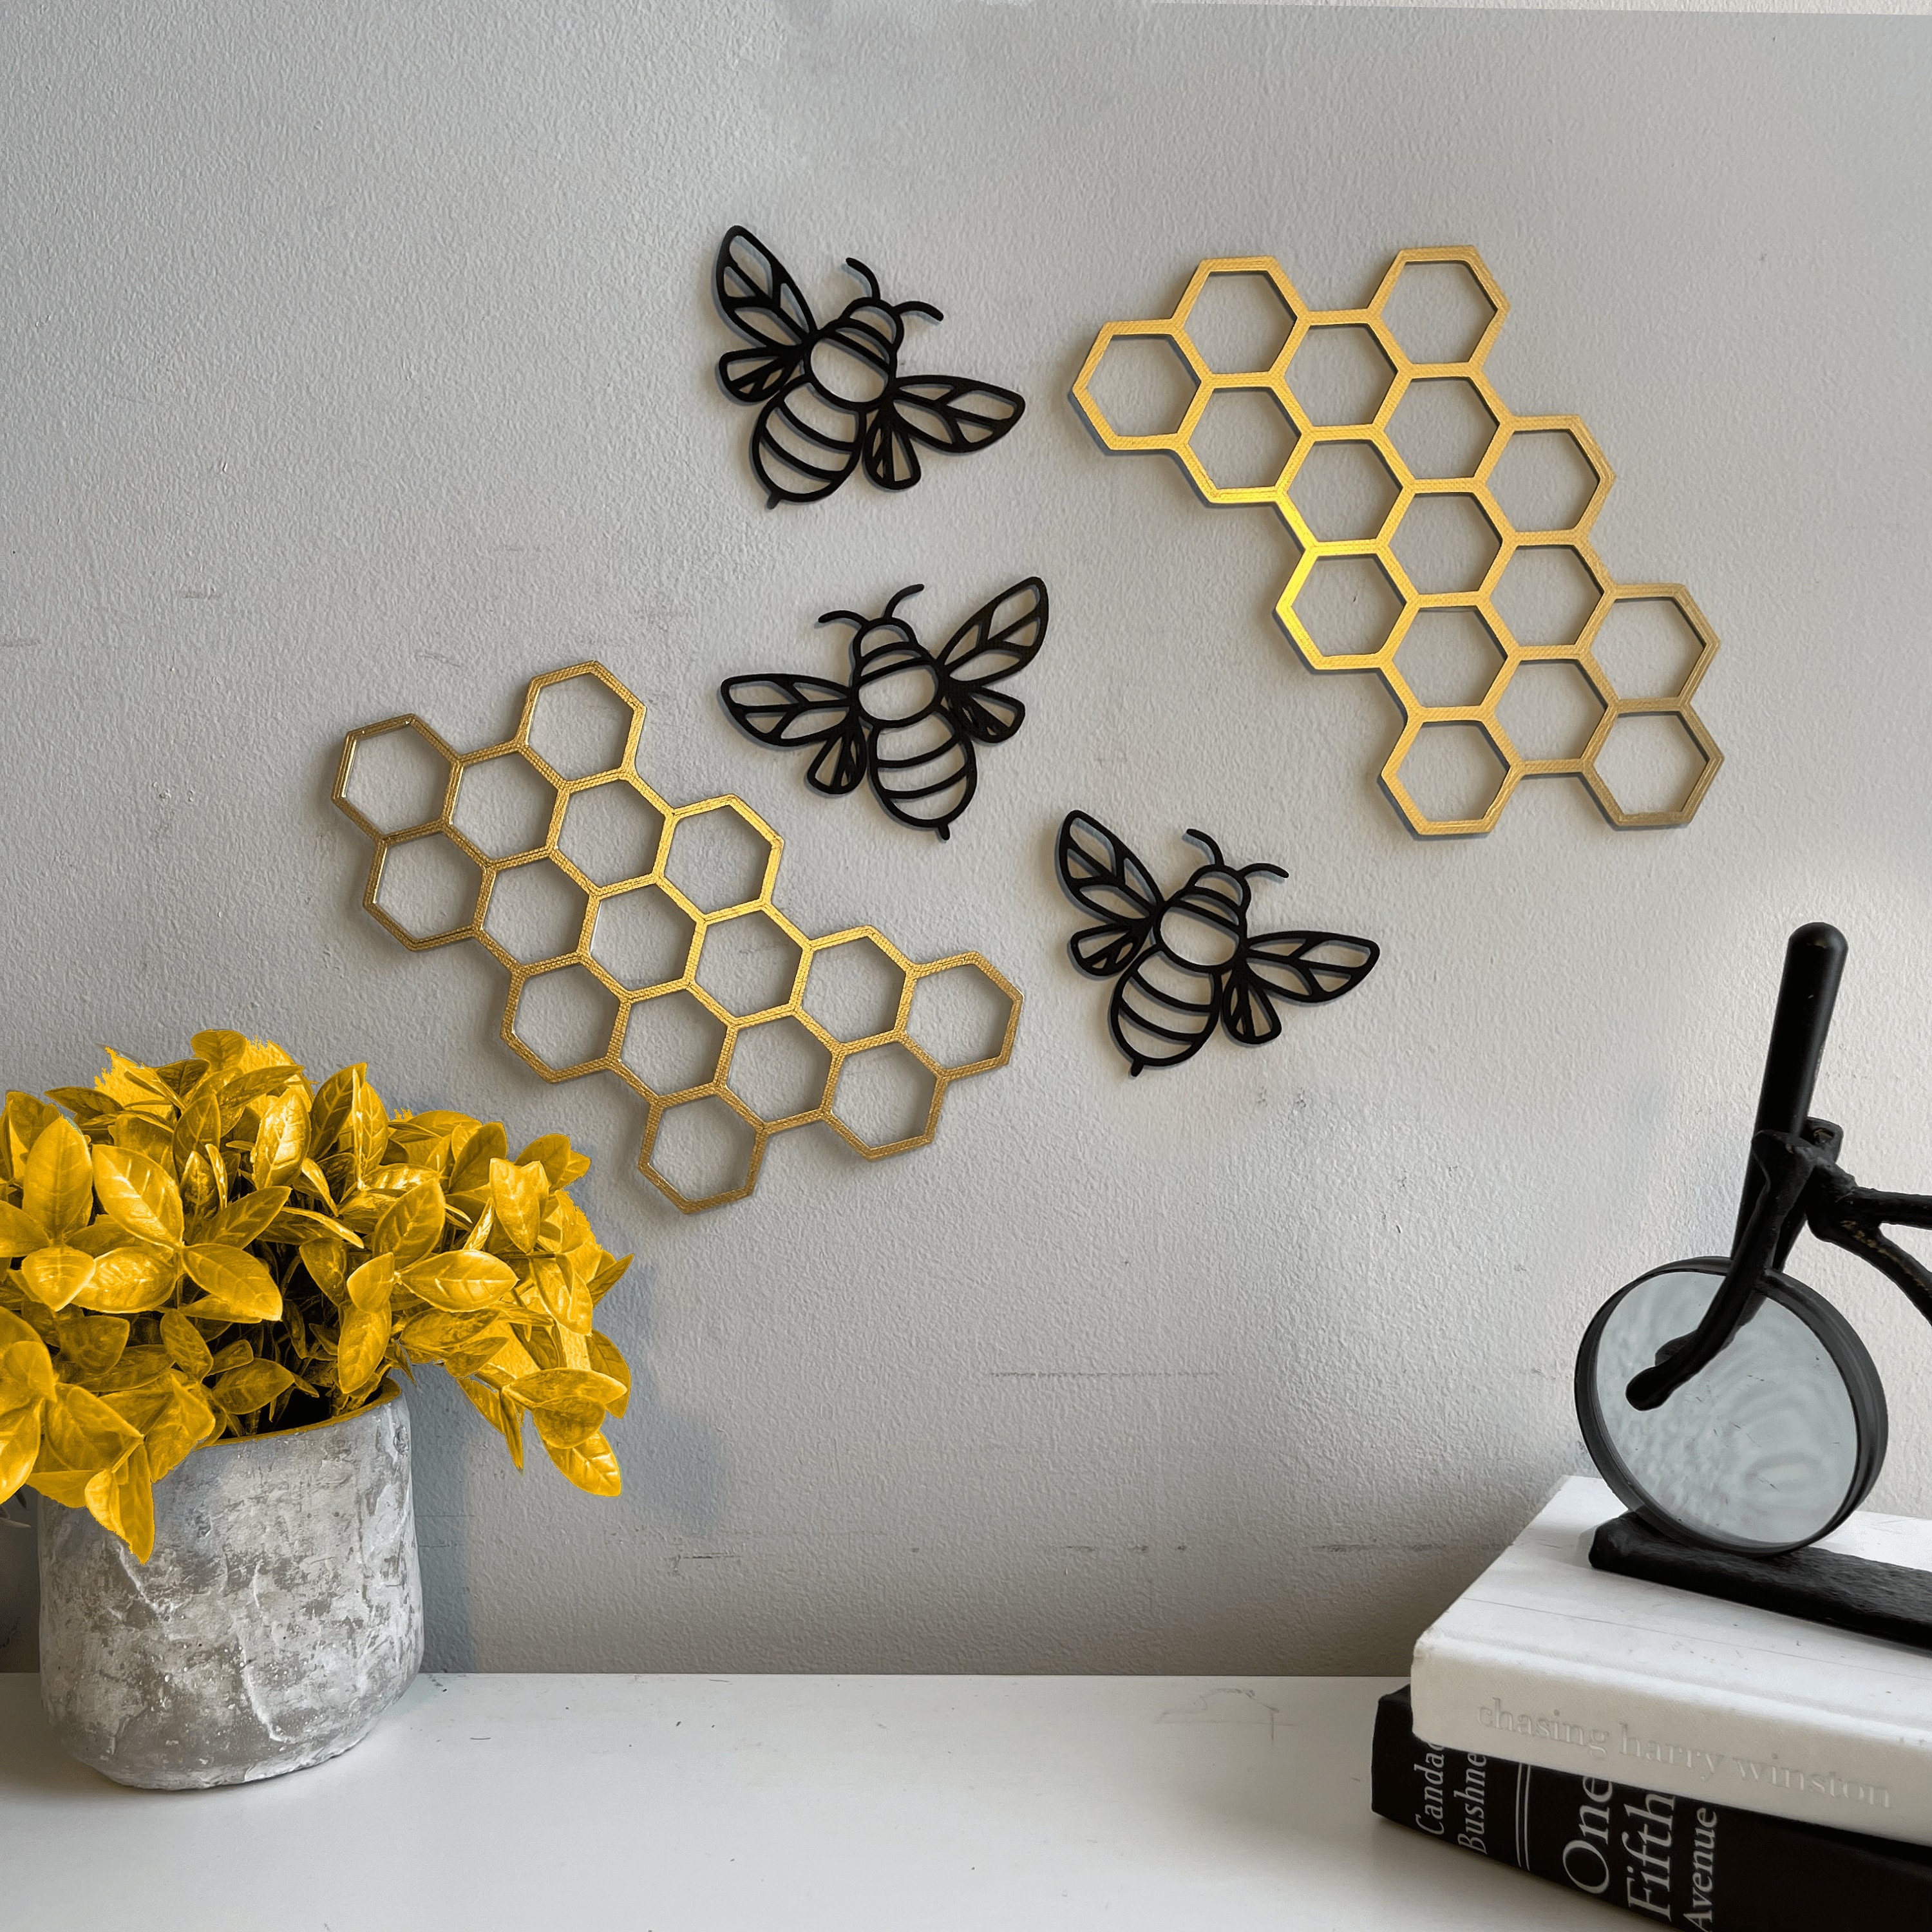 Honey Bee Bee Hives Table Runner, Country Farmhouse Kitchen Decor, Bee –  Kate McEnroe New York